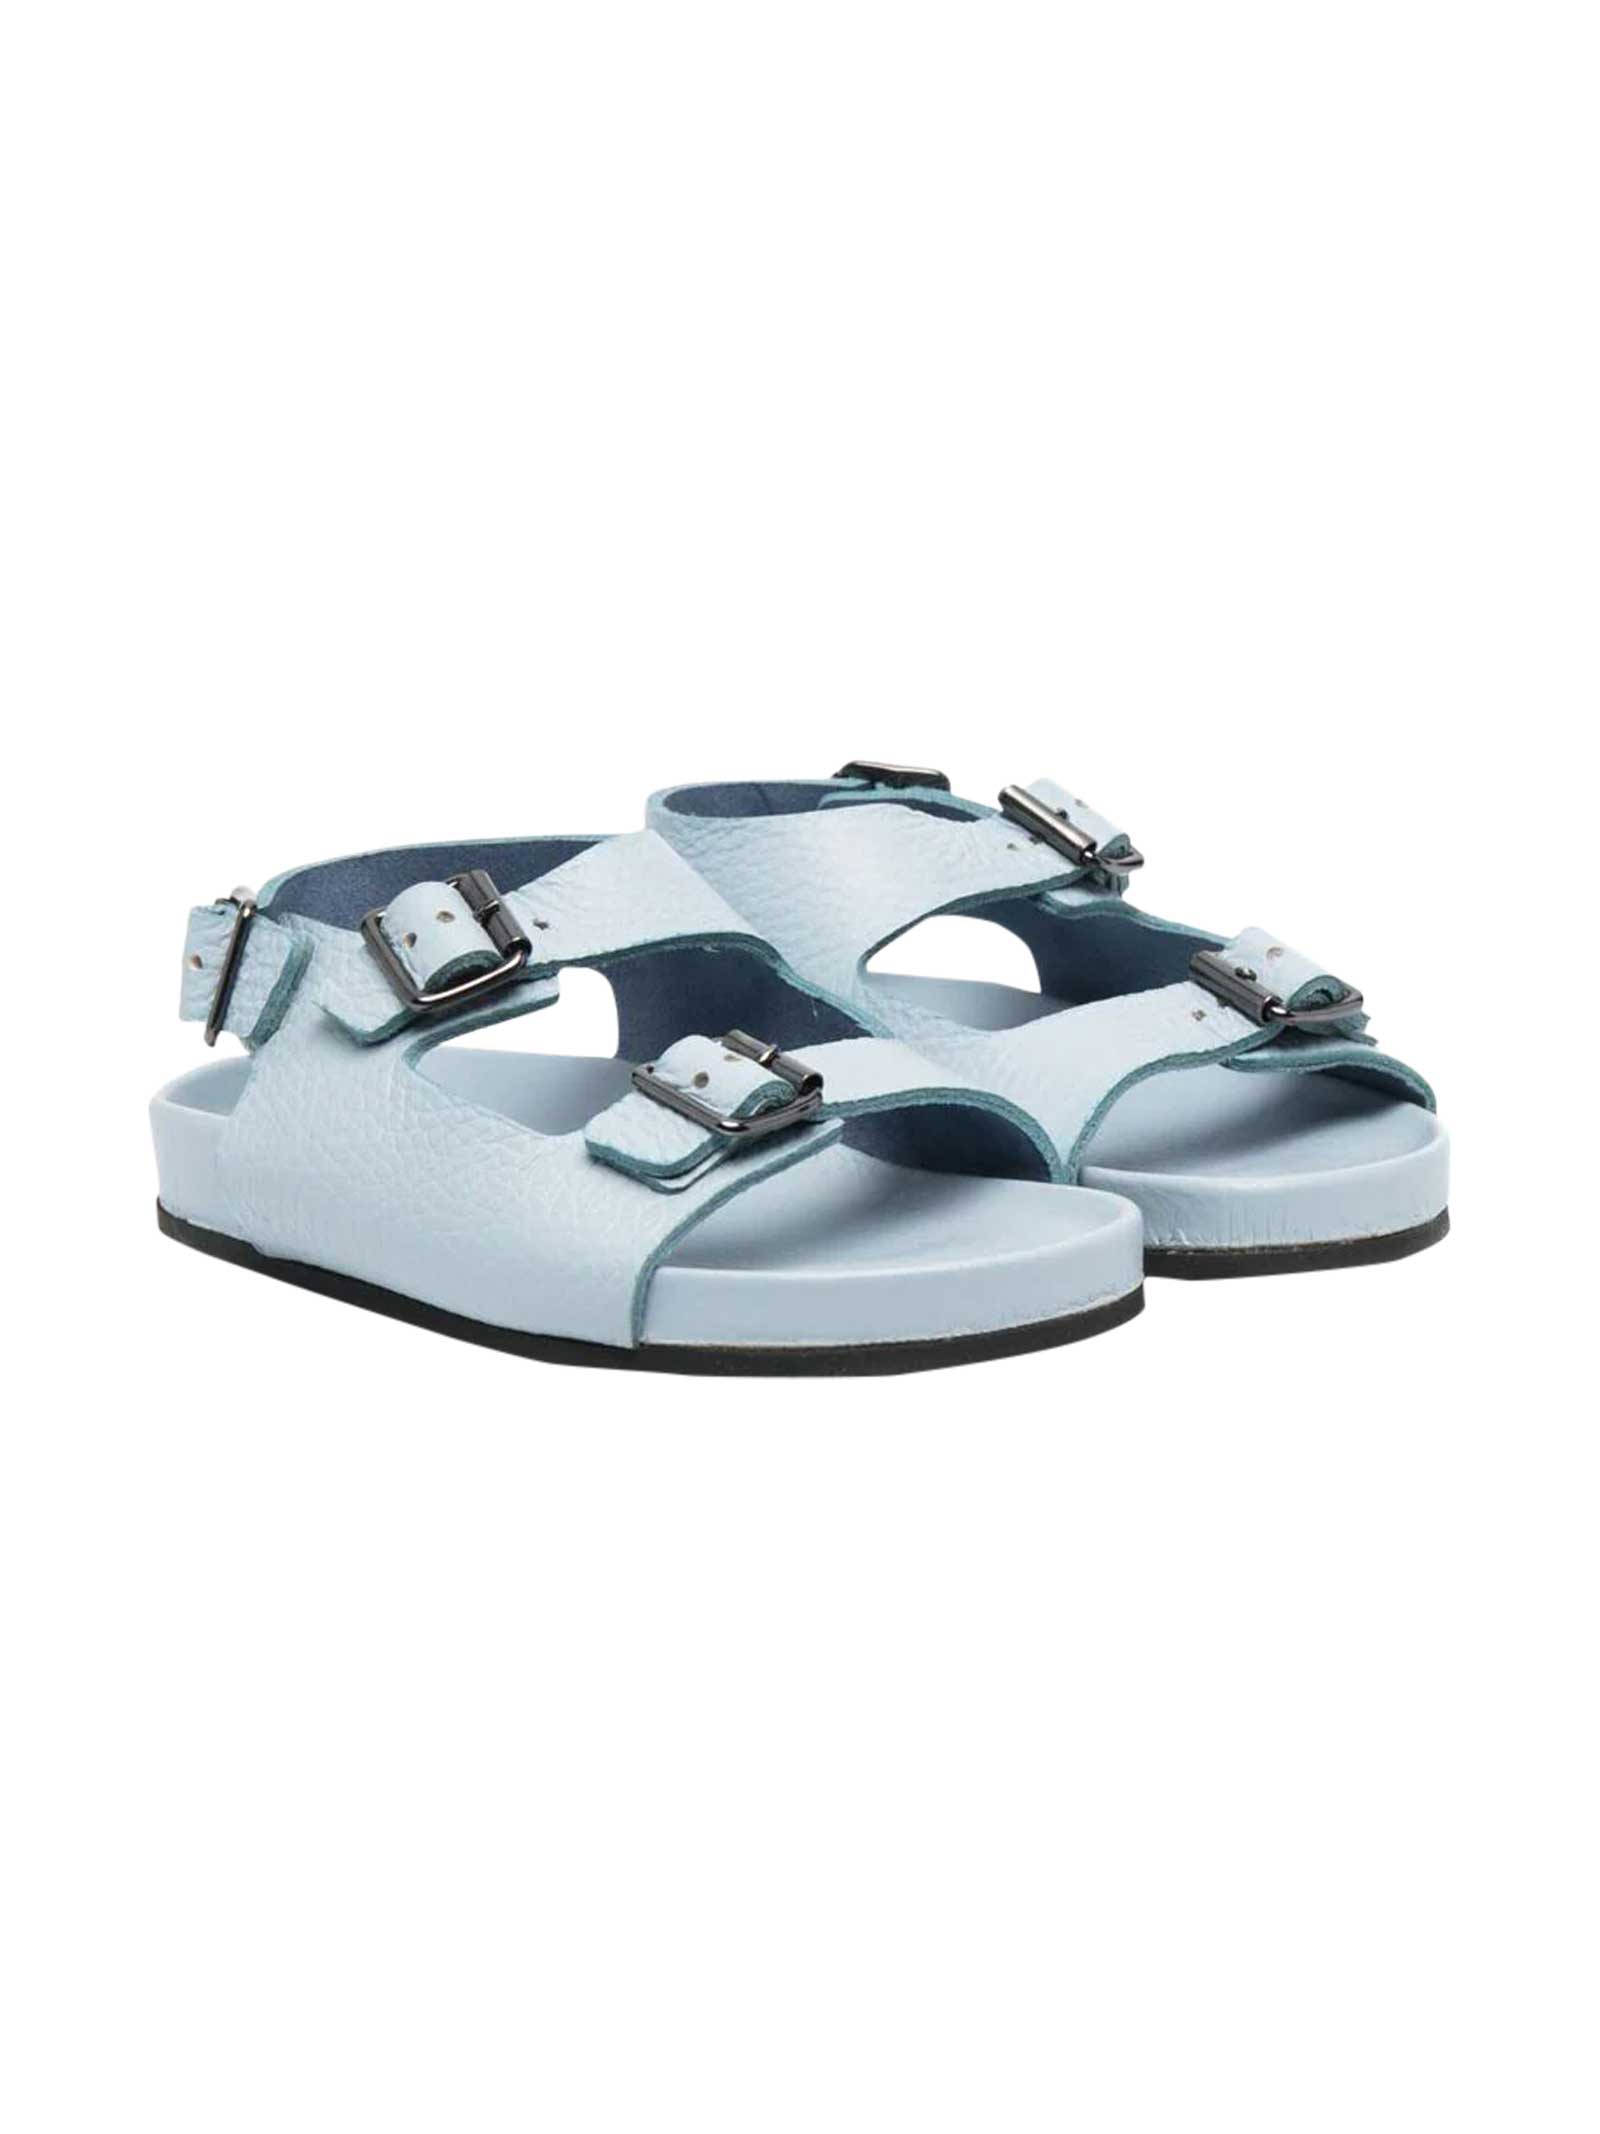 Gallucci Kids Light Blue Sandals